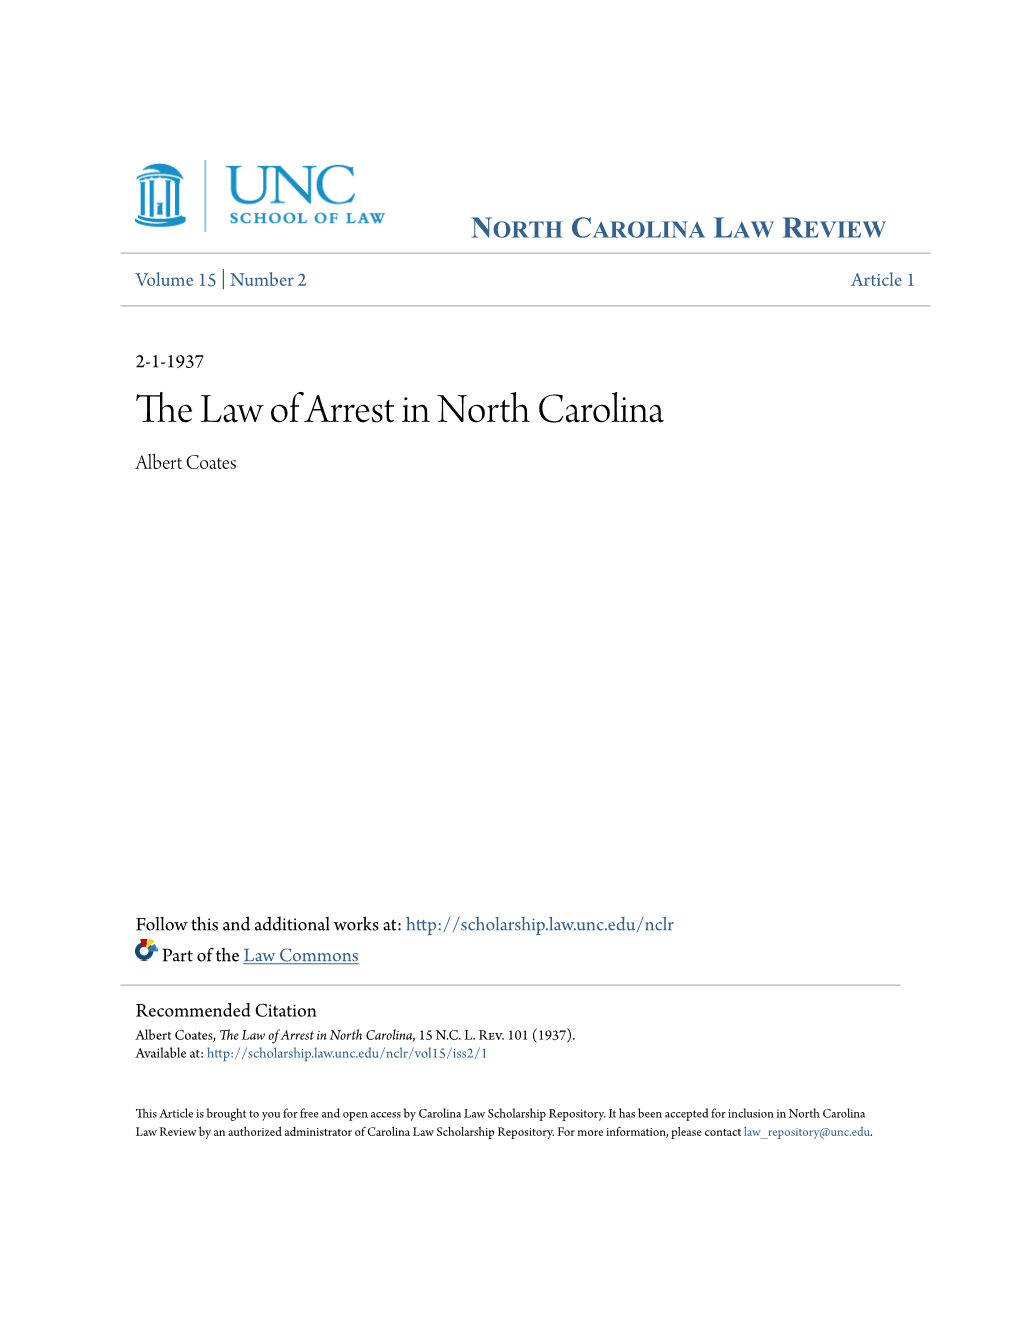 The Law of Arrest in North Carolina Albert Coates